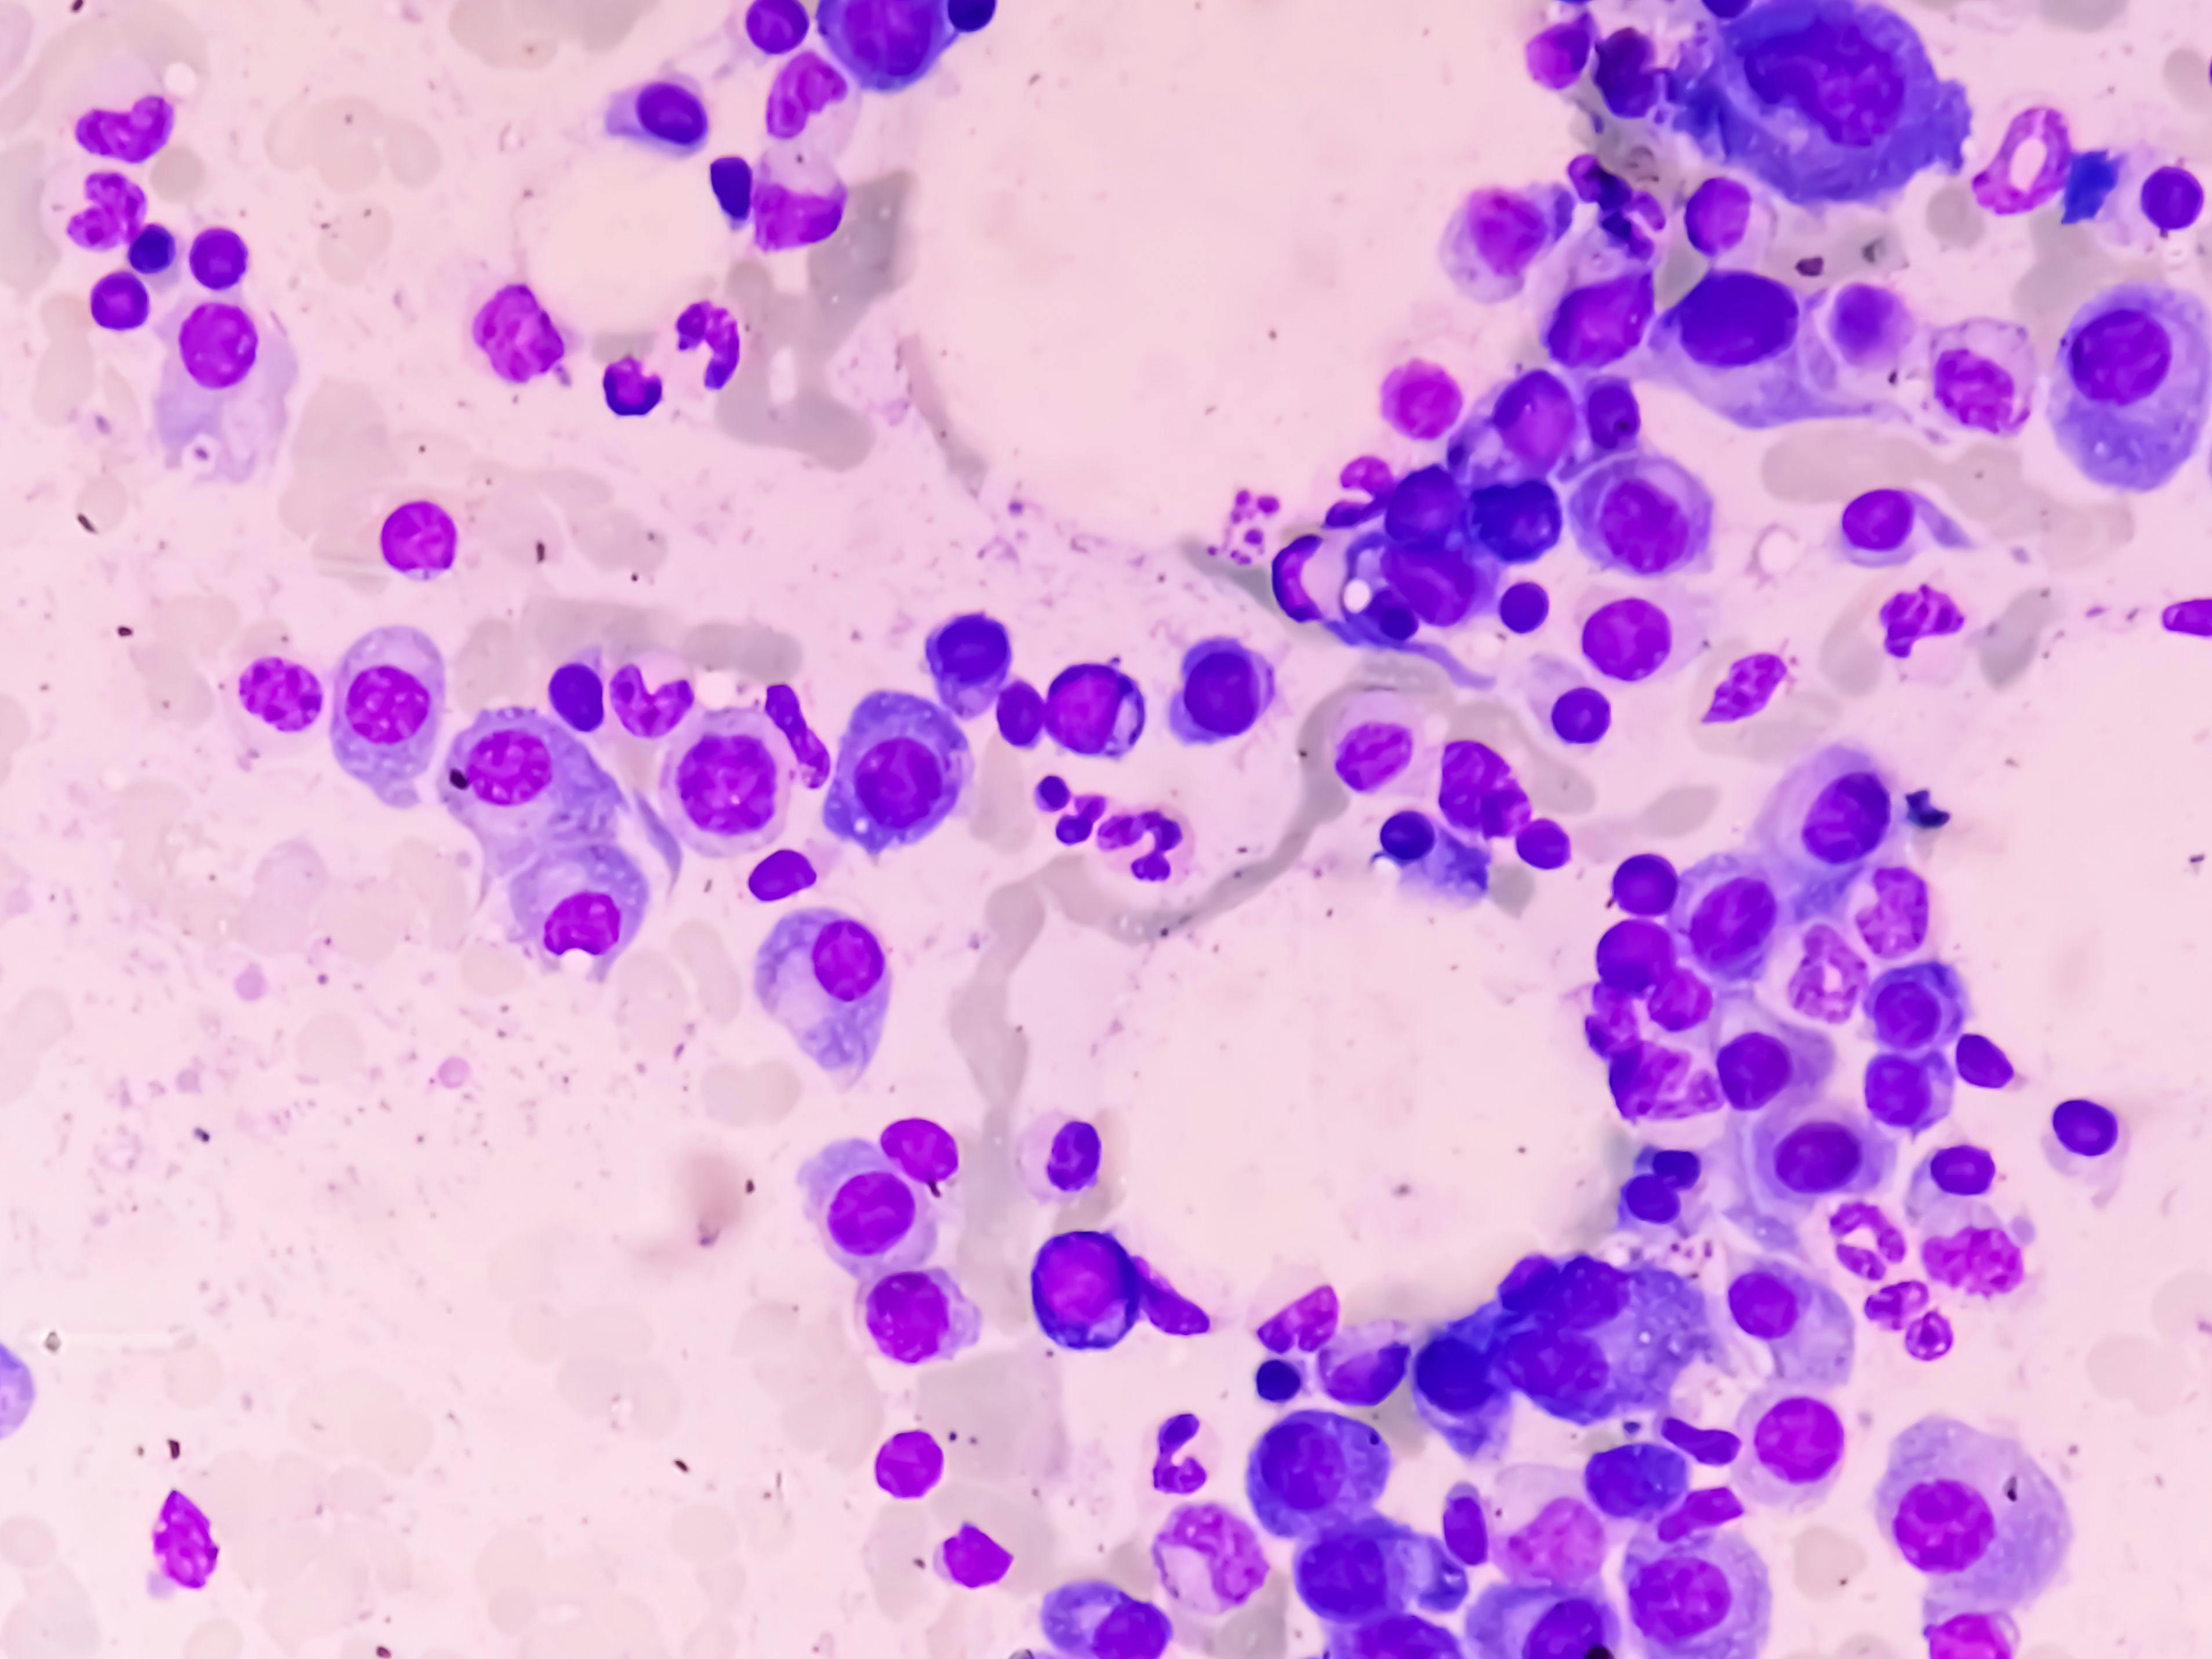 Microscopic view of bone marrow with multiple myeloma -- Image credit: Saiful52 | stock.adobe.com